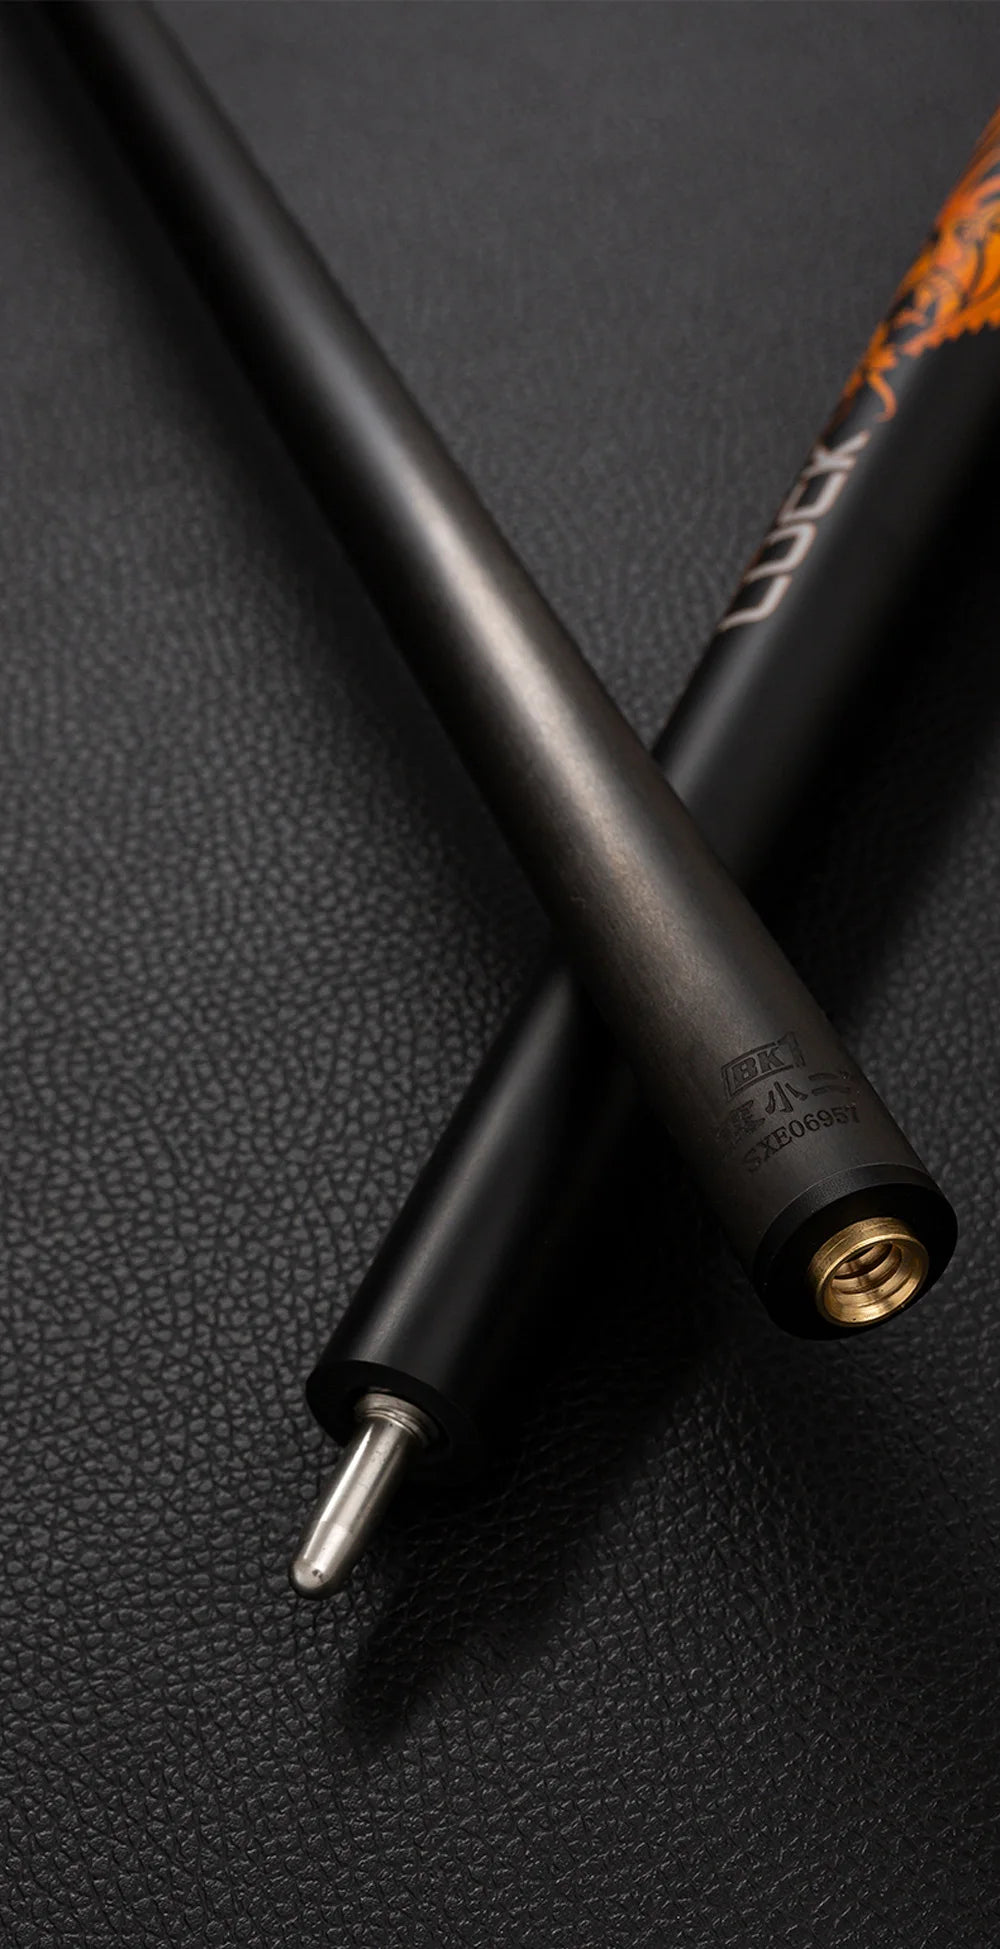 Sai Xiaoer Black technology Punch Carbon Fiber Cue 13mm 58'' Bakelit Tip 1/2 Break Cue Uniloc Pin Joint Billiard Table Cue